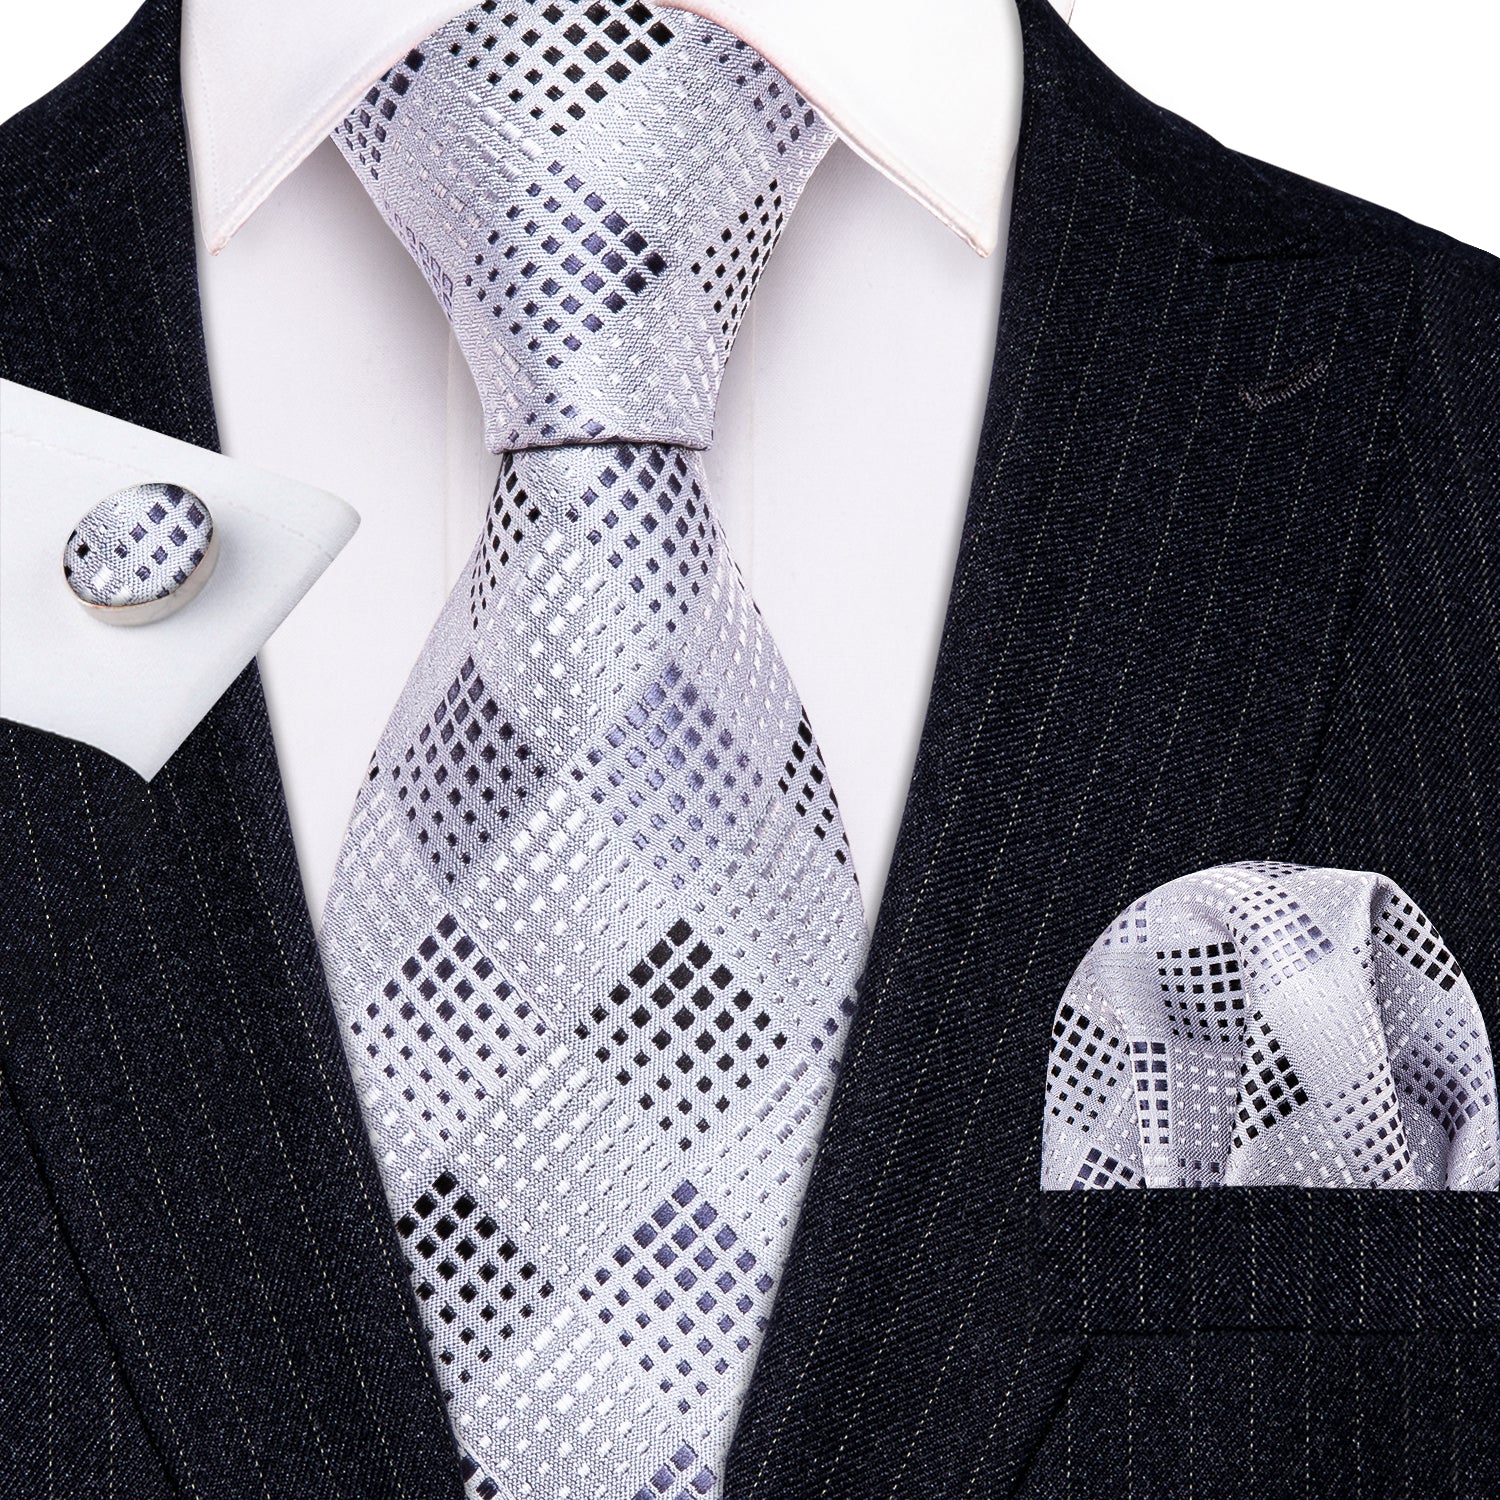 Silver White Plaid Silk Men's Tie Pocket Square Cufflinks Set